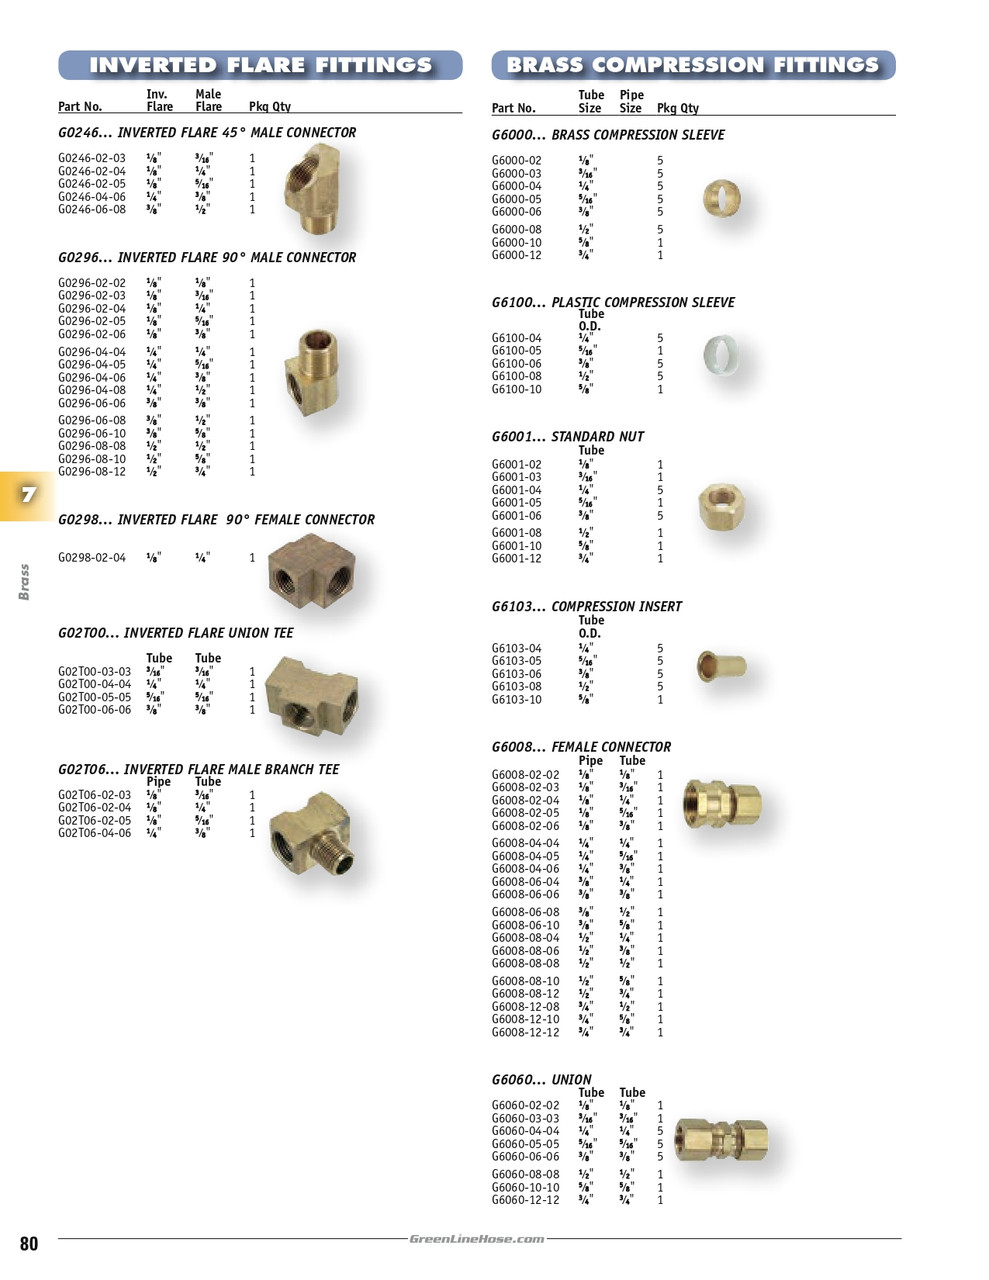 3/4" Brass Compression Union   G6060-12-12